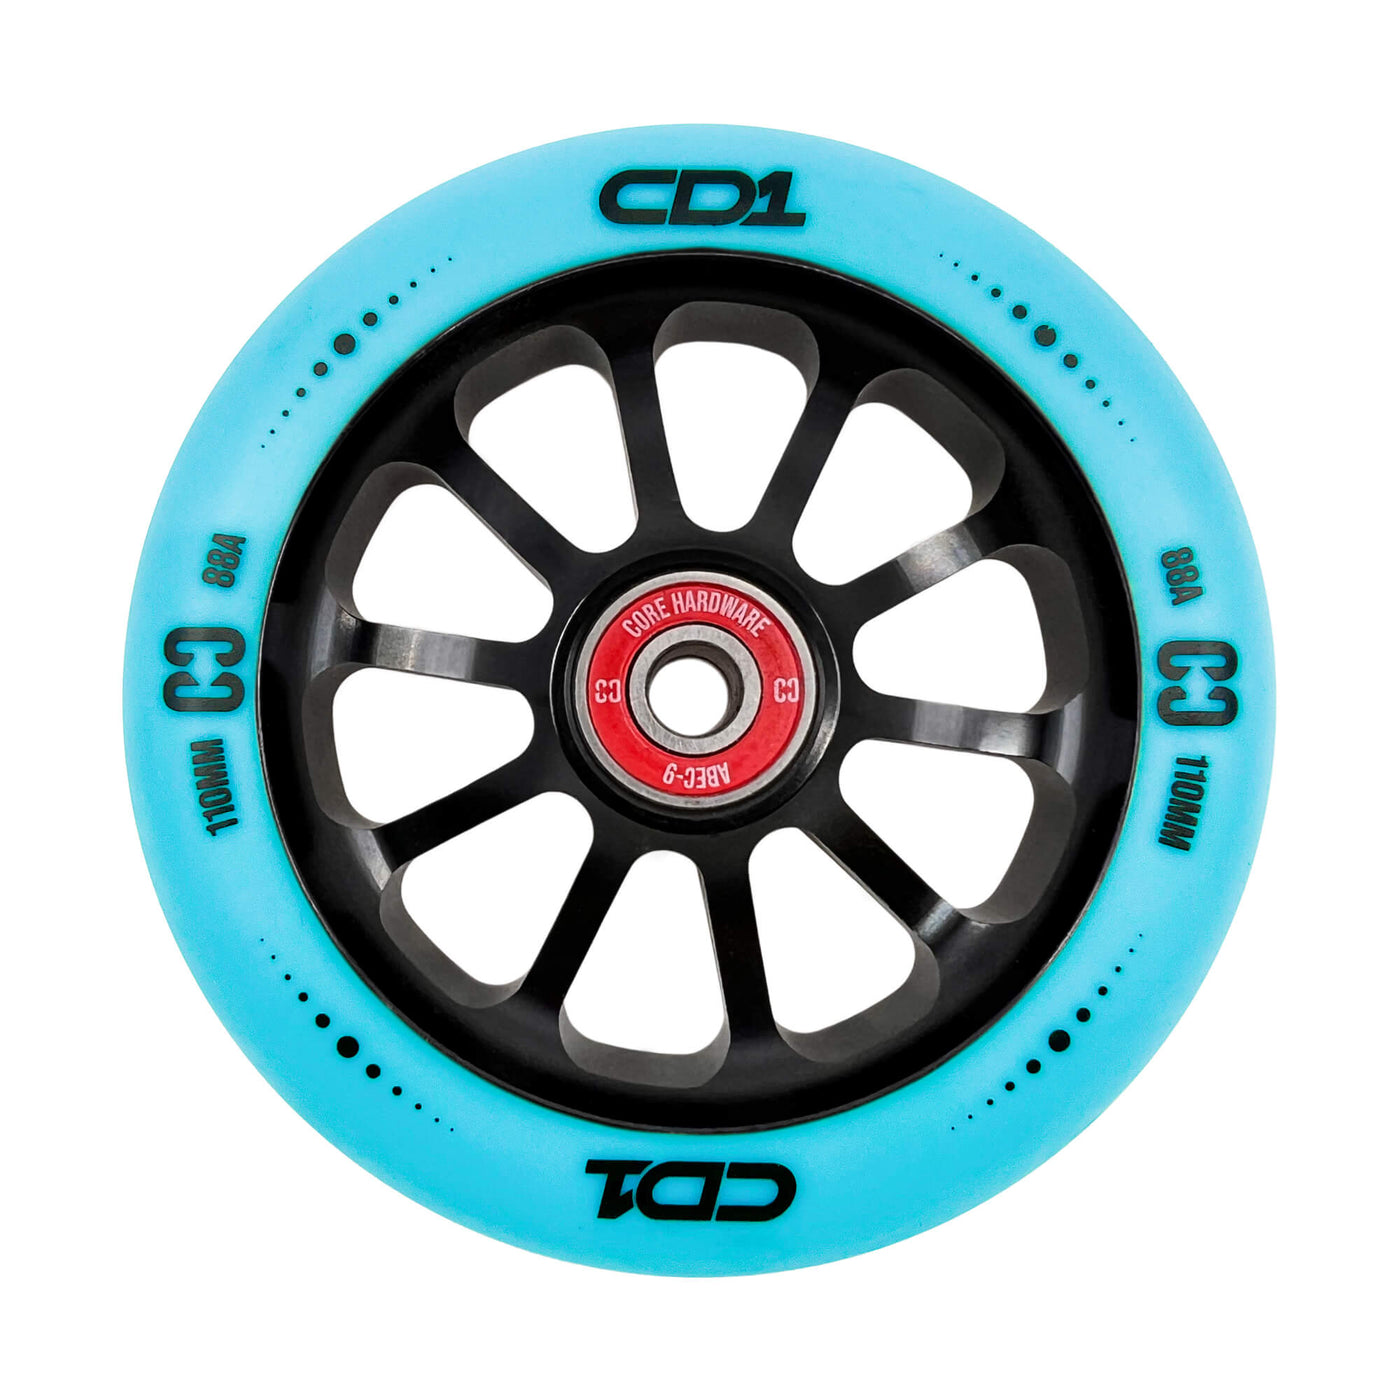 CORE CD1 Spoked Stunt Scooter Wheel 110mm -  Blue/Black